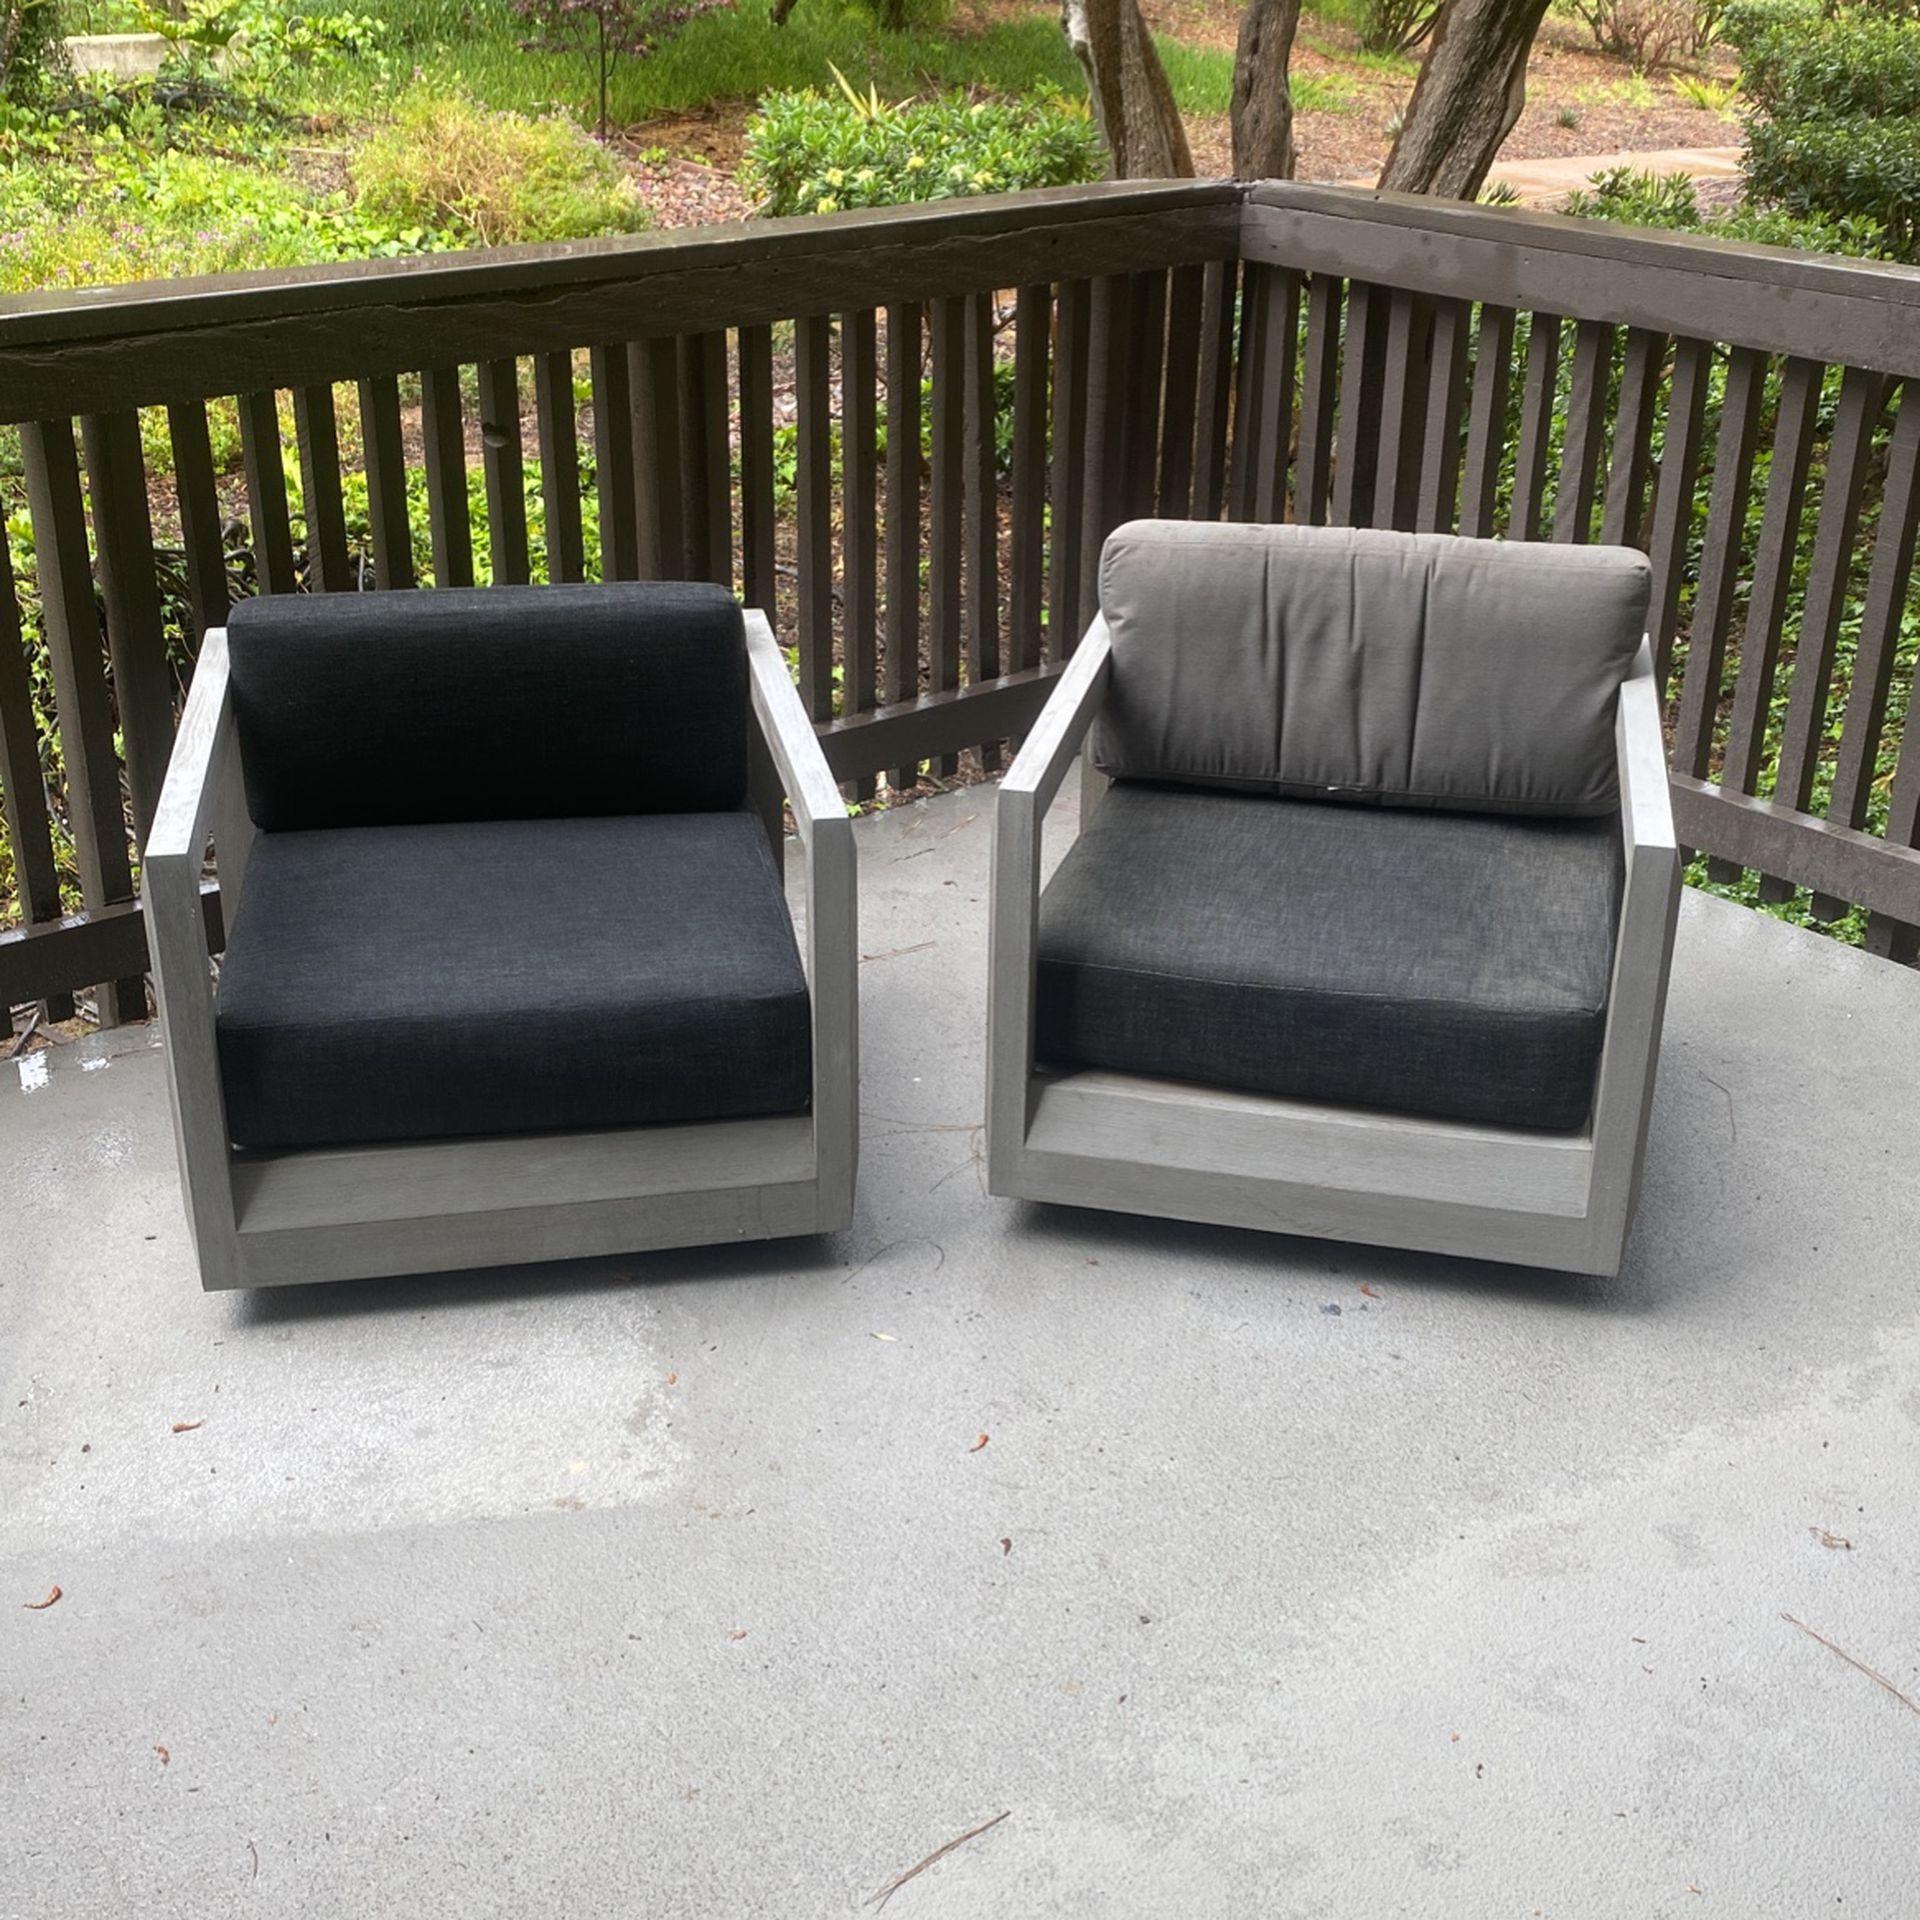 Restoration Hardware Swivel Chairs Patio Furniture (pair)